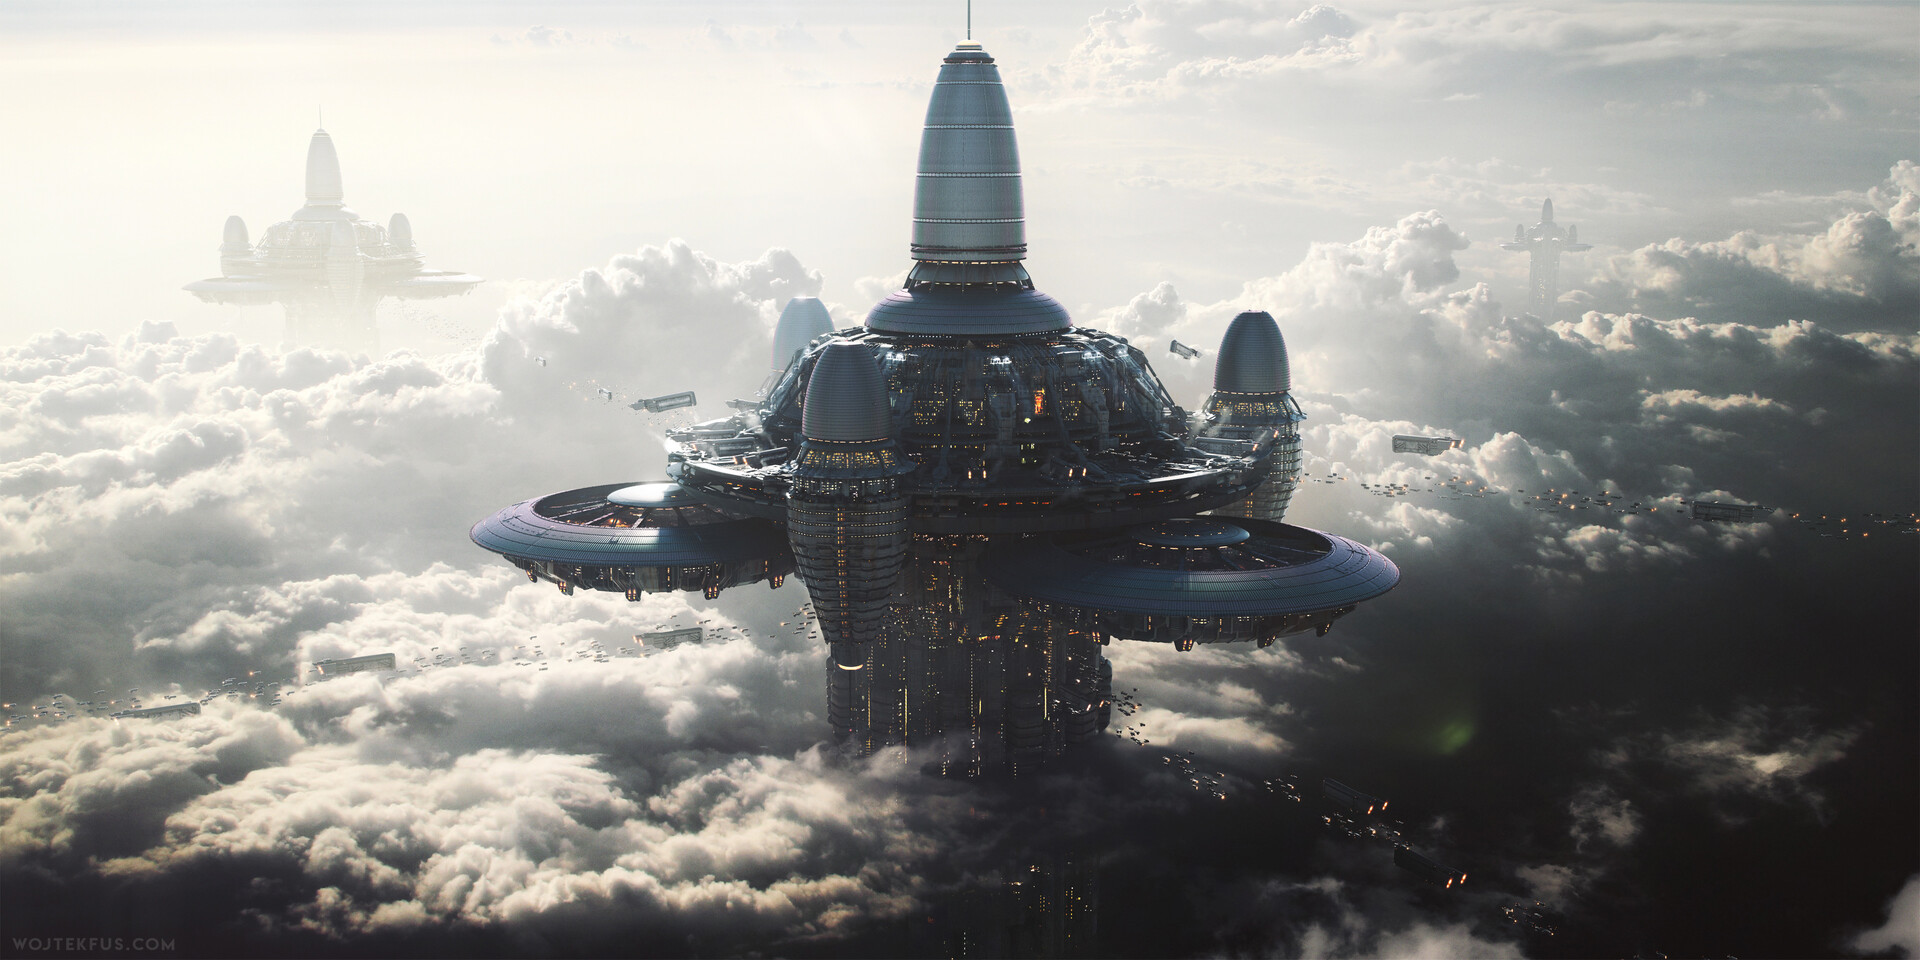 Sci Fi Building Art by Wojtek Fus